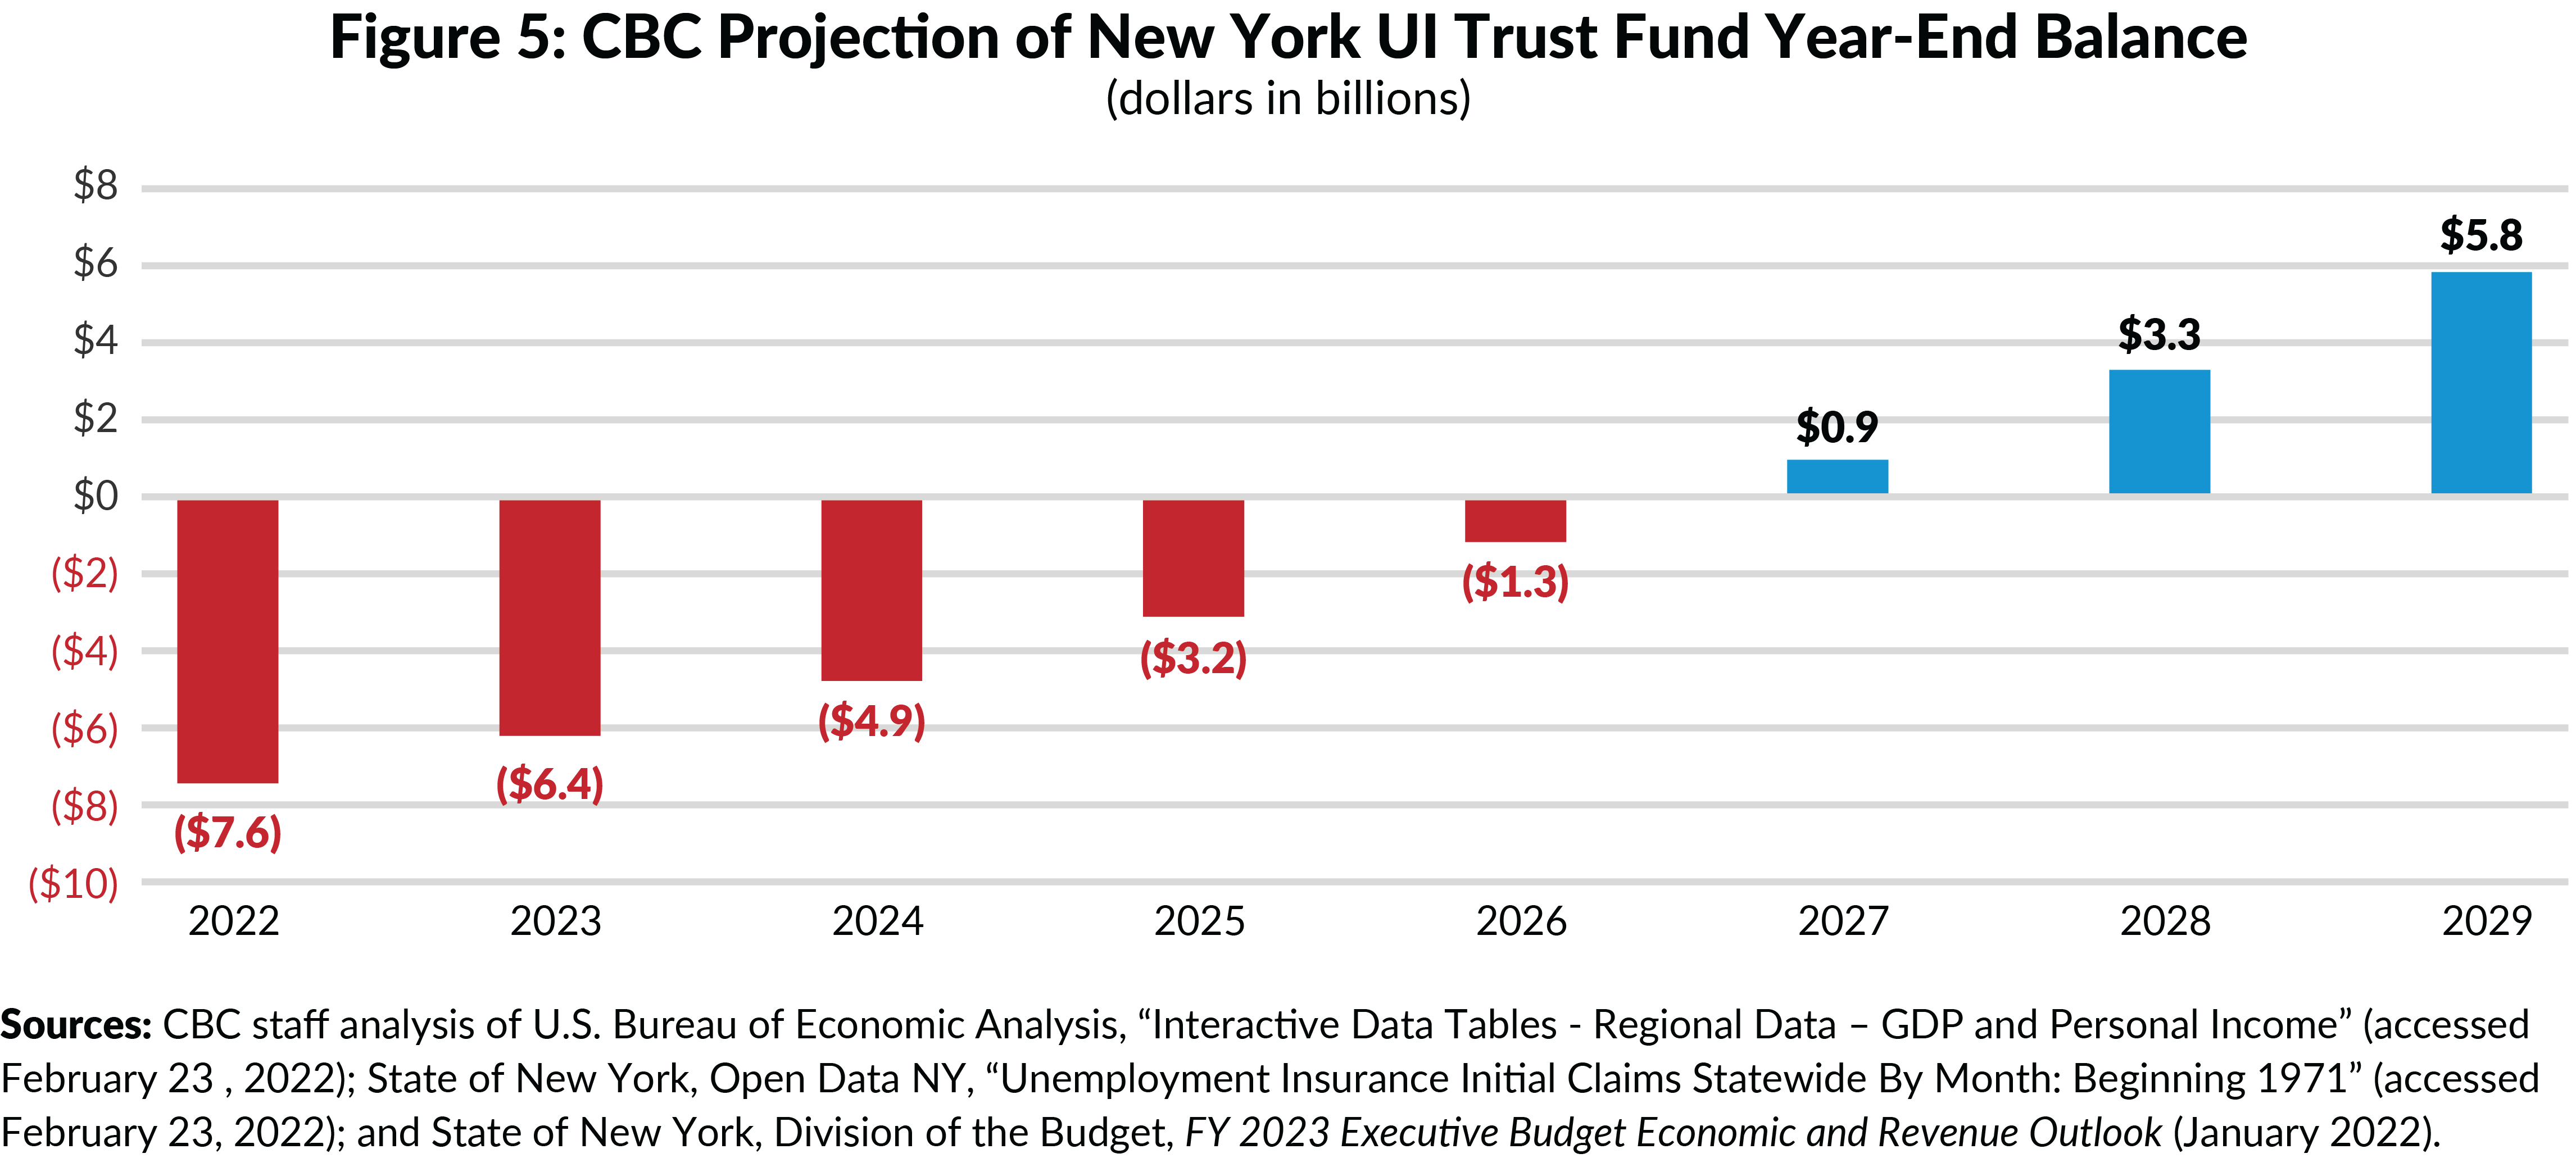 Figure 5: Projected New York UI Trust Fund Balance